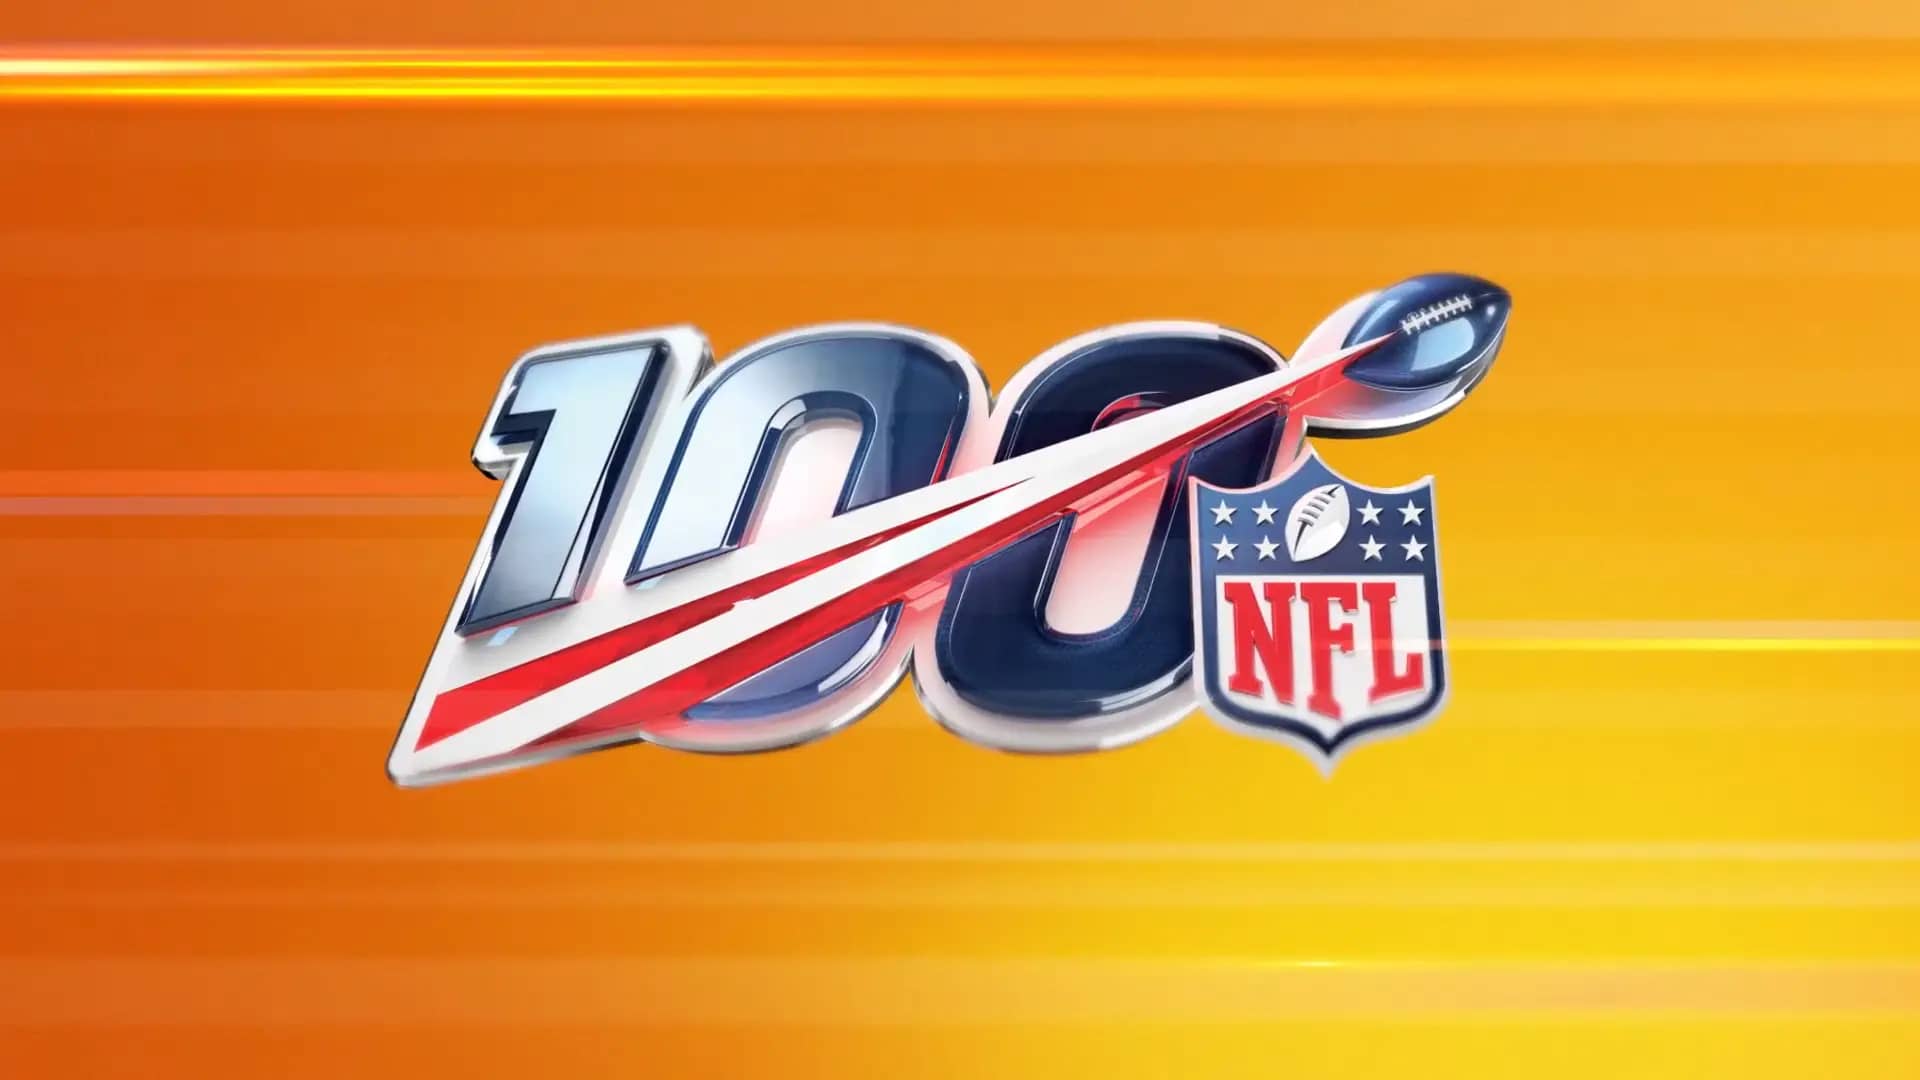 NFL: Kickoff, “Celebrating 100 Years”.